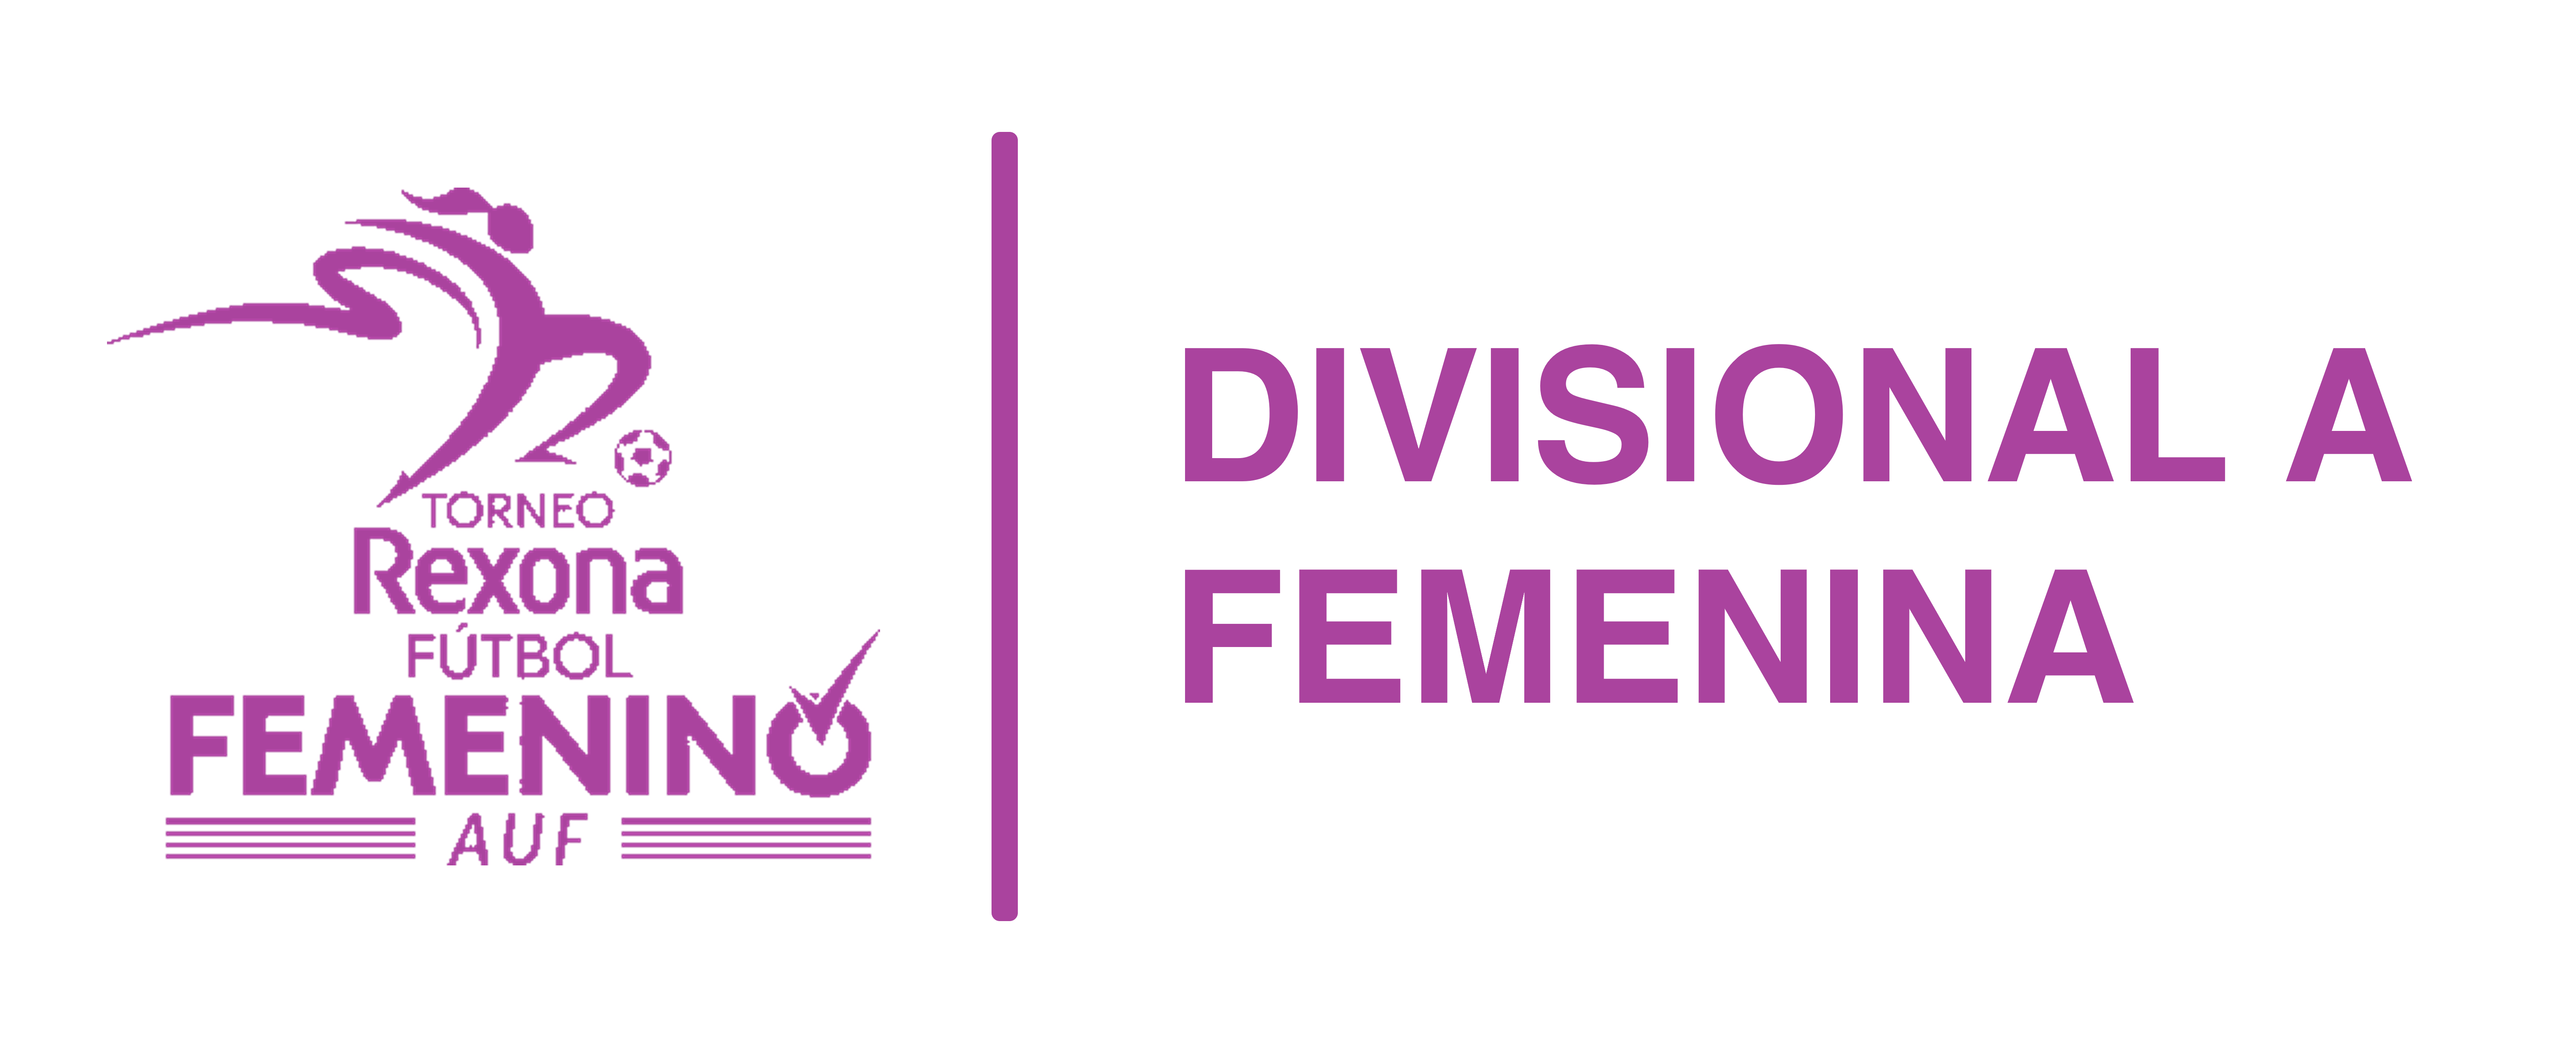 File:Logo Campeonato Uruguayo Divisional A Femenina.png - Wikimedia Commons